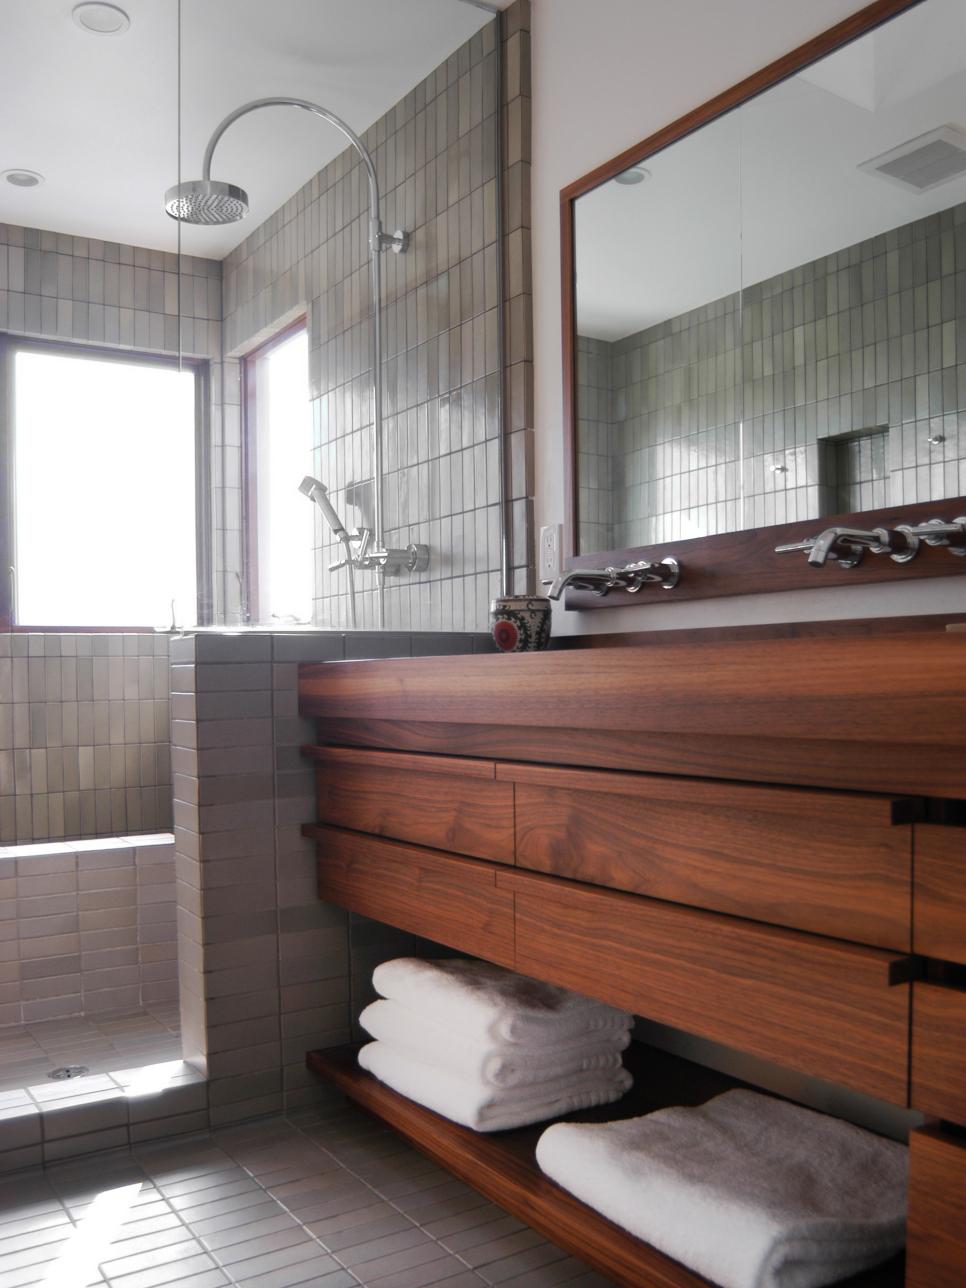 15 Simply Chic Bathroom Tile Design Ideas | HGTV